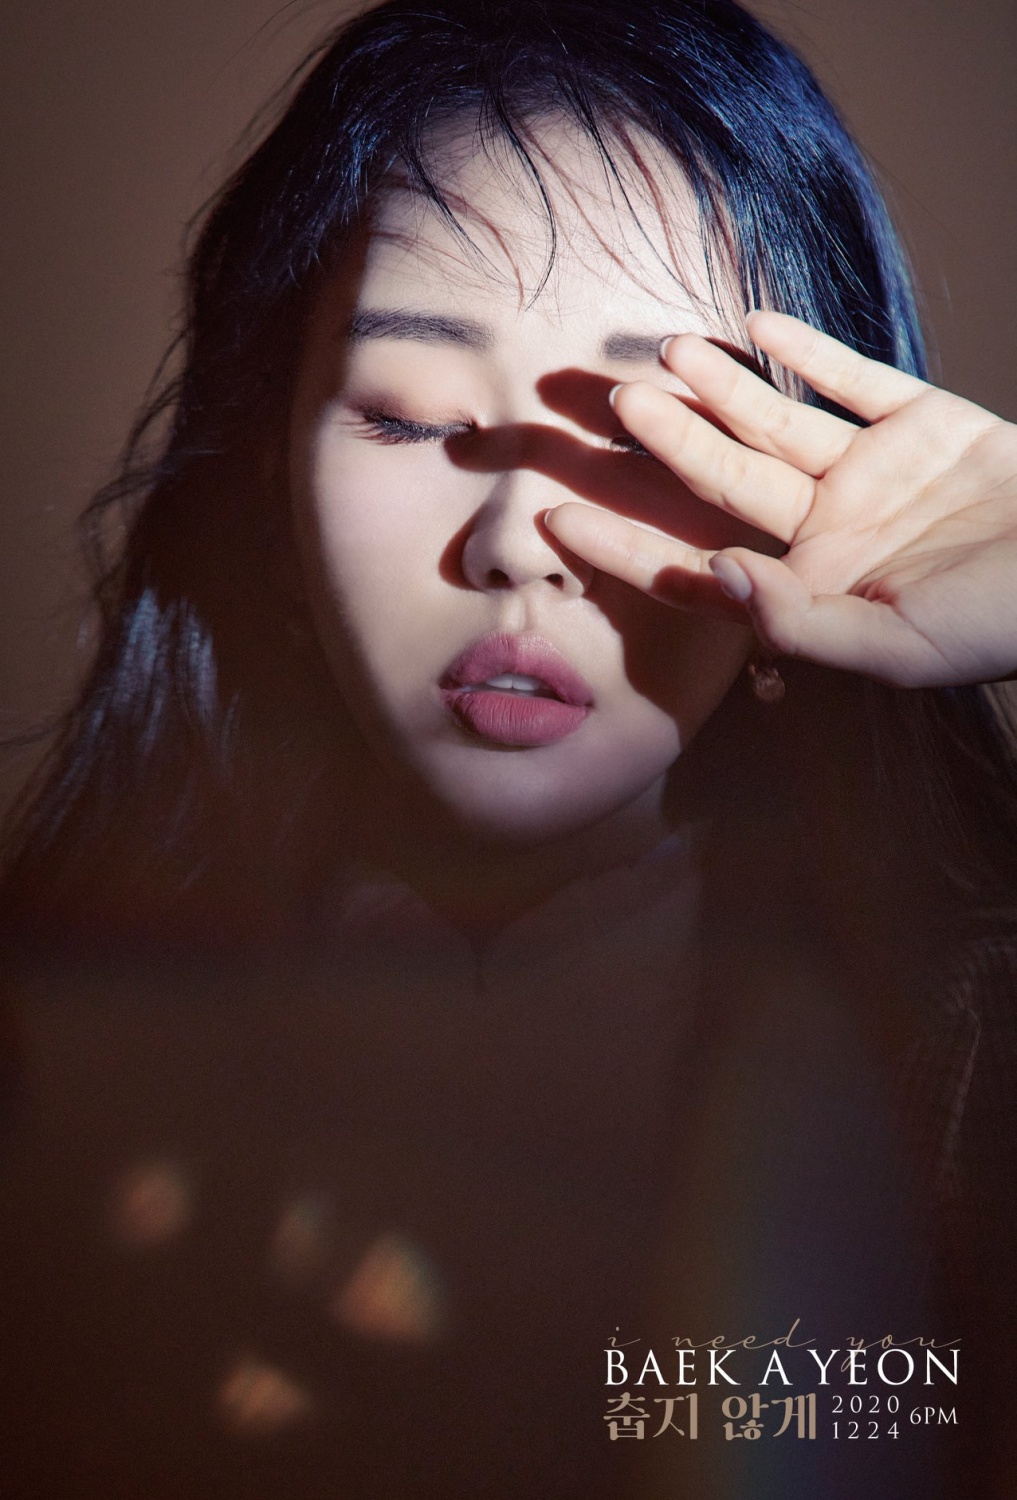 '24th Comeback' Baek A-yeon, 'I need you' concept photo released